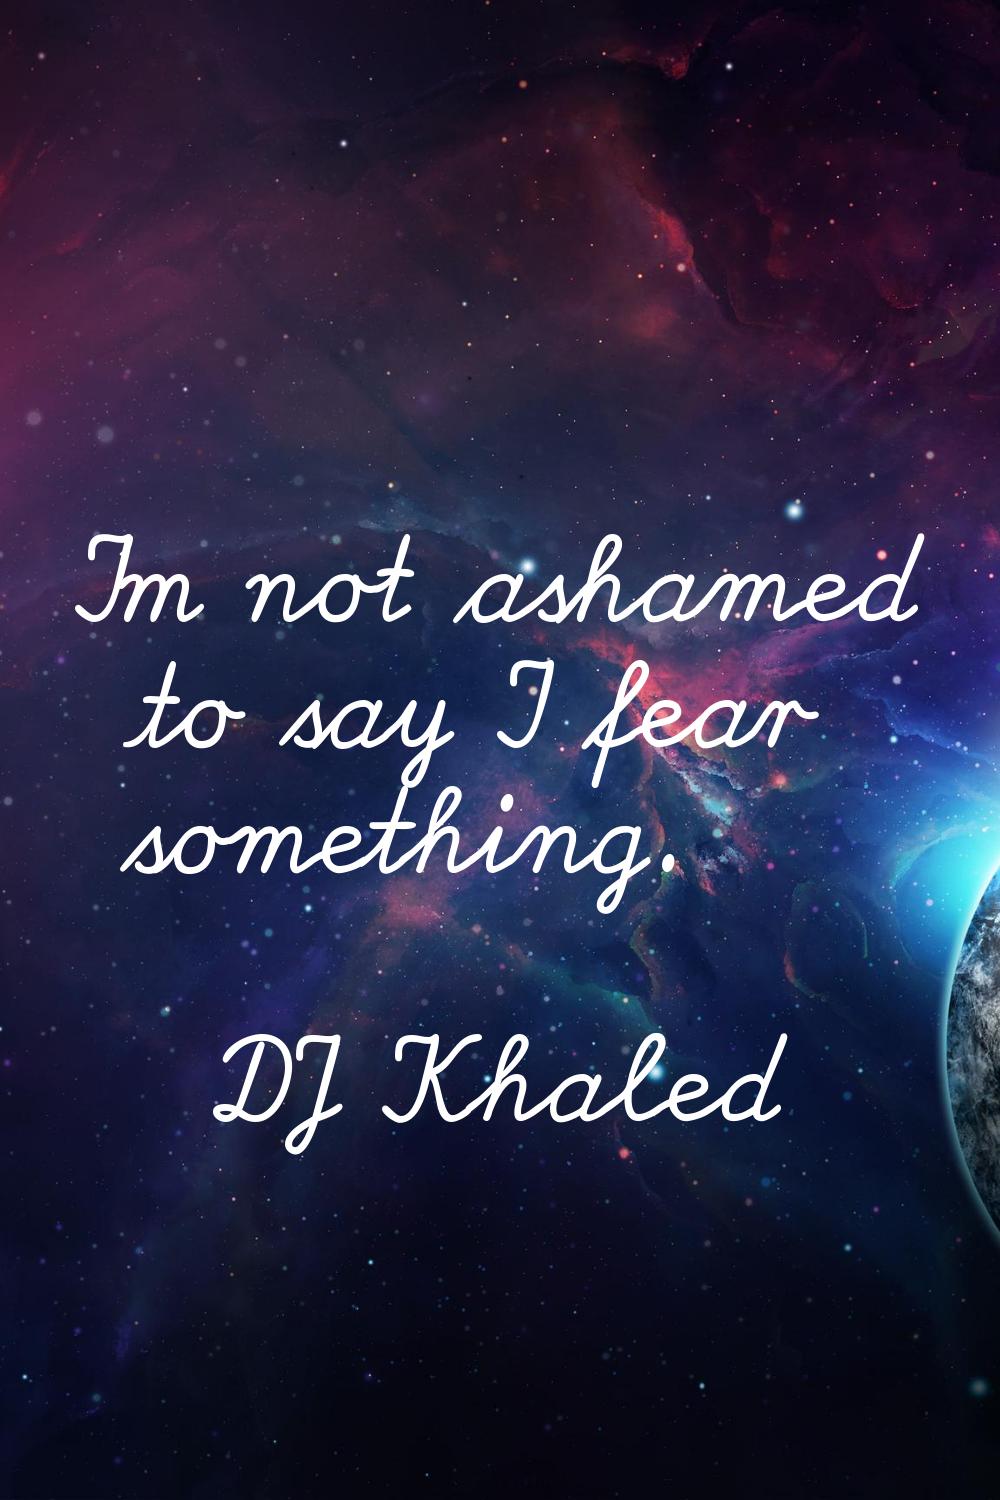 I'm not ashamed to say I fear something.